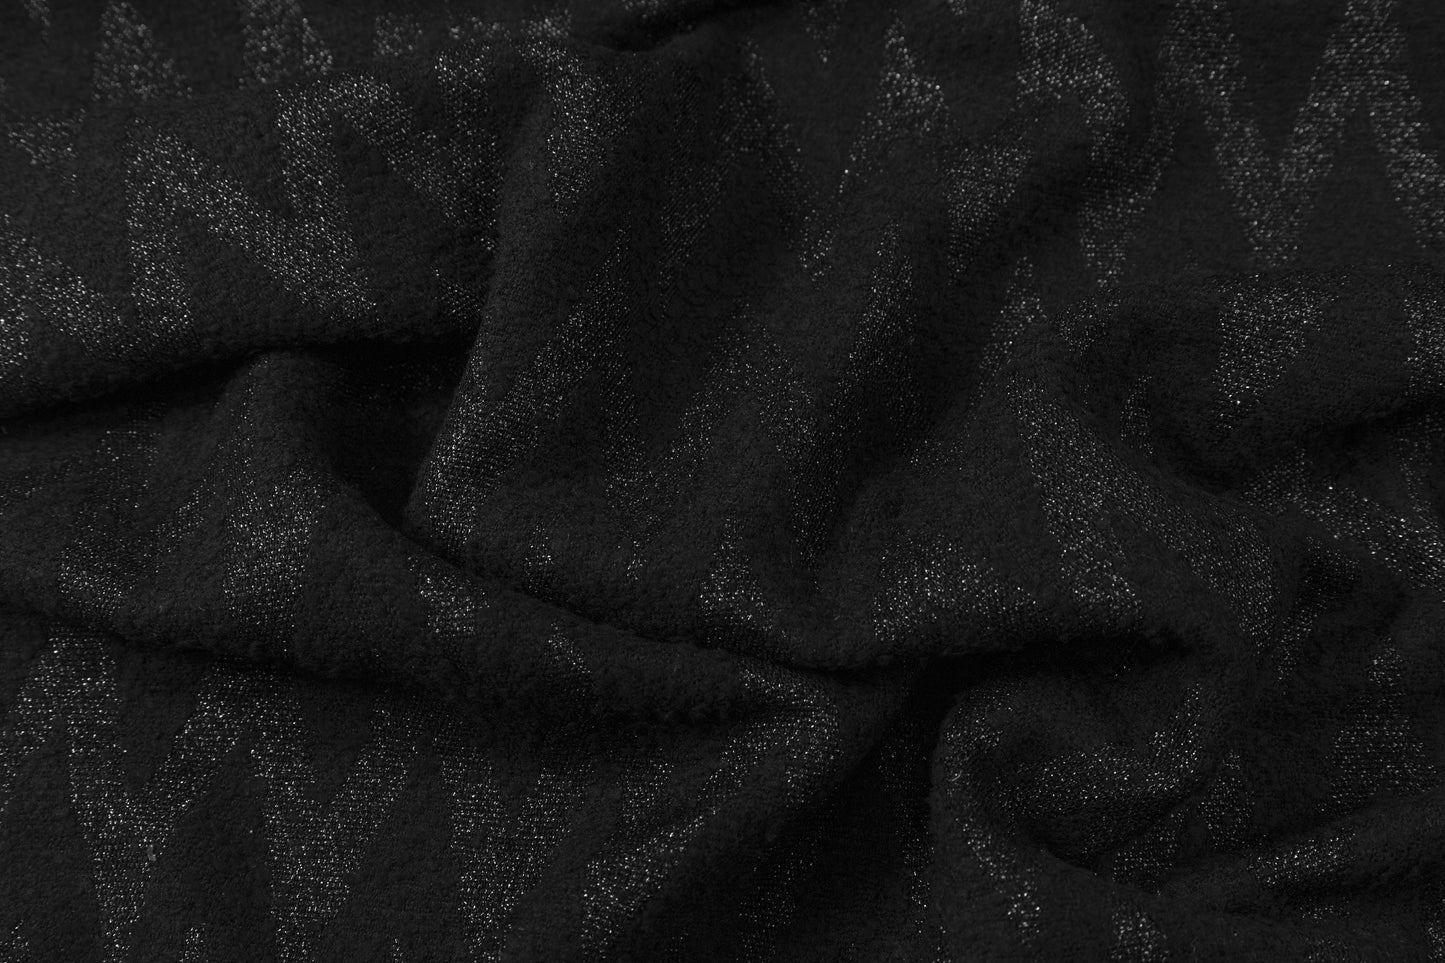 Chevron Metallic Italian Wool - Black